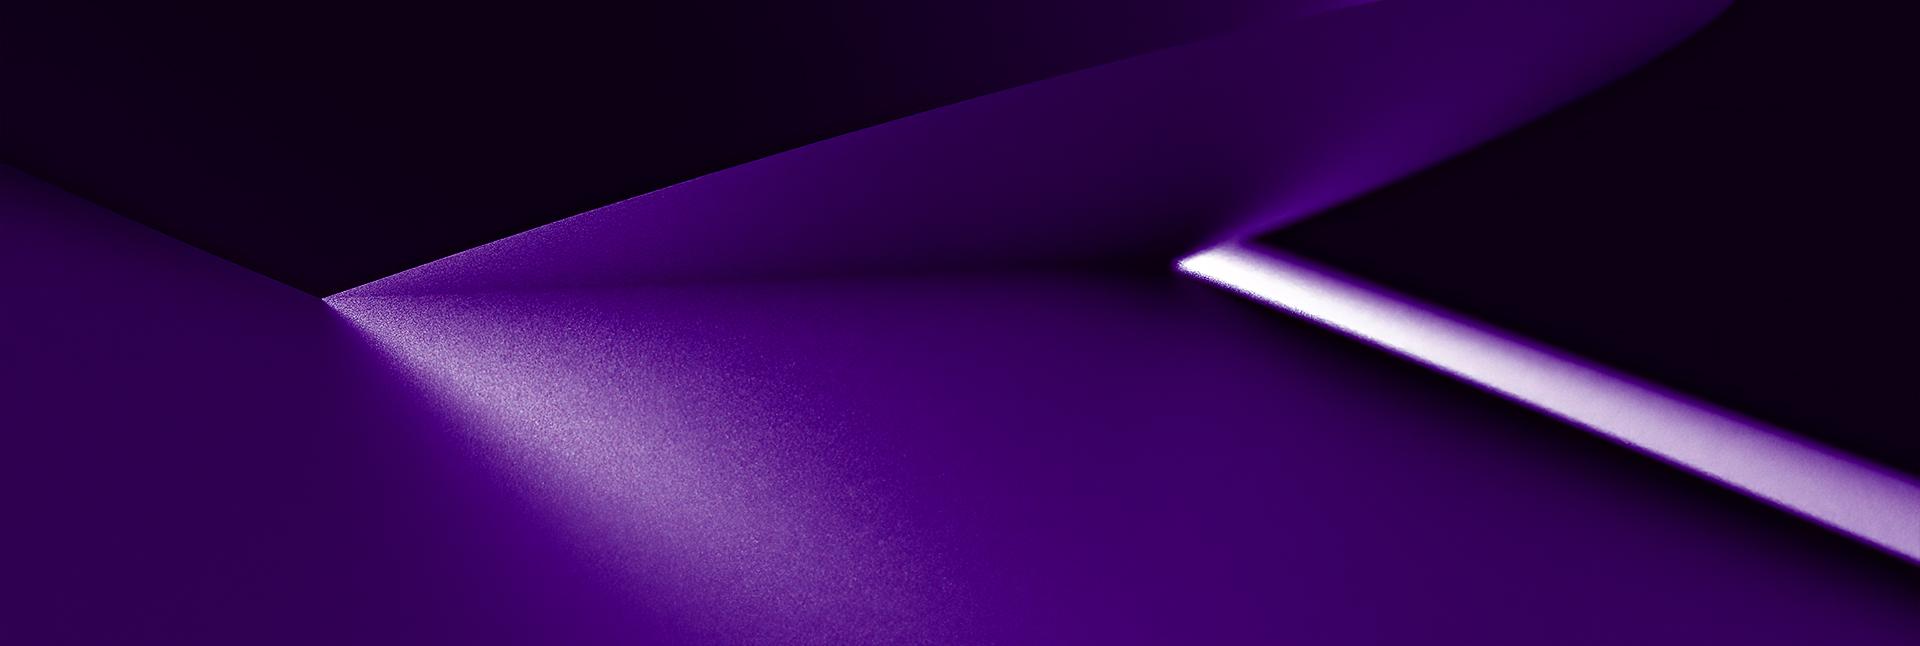 rra-background-purple-4.jpg